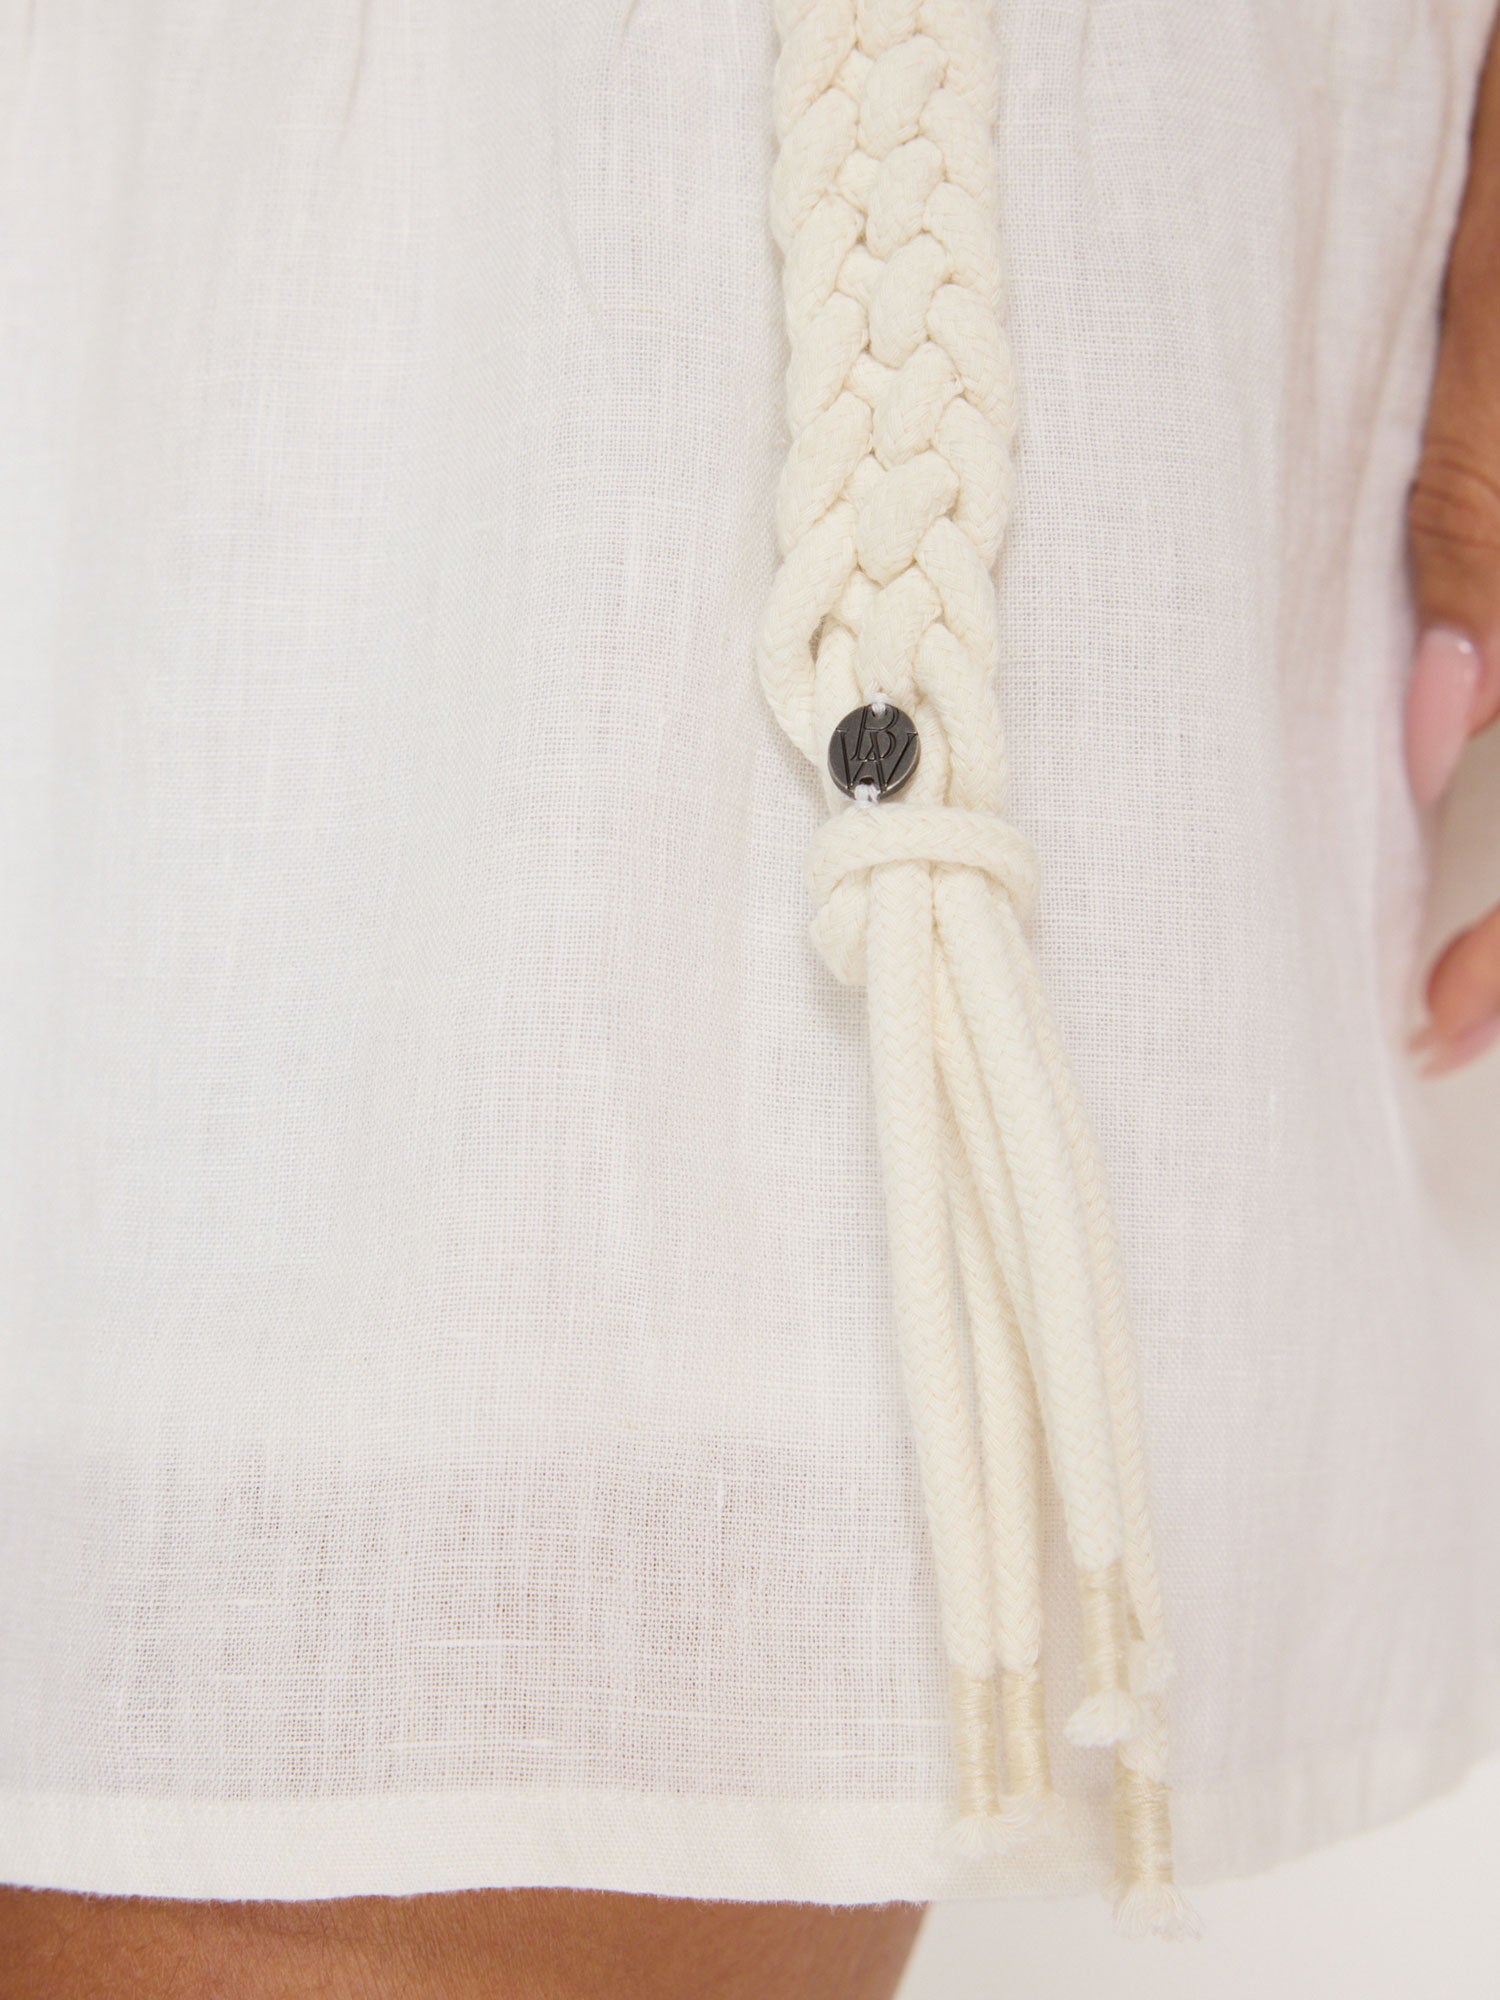 Macrame natural cotton belt coiled close up